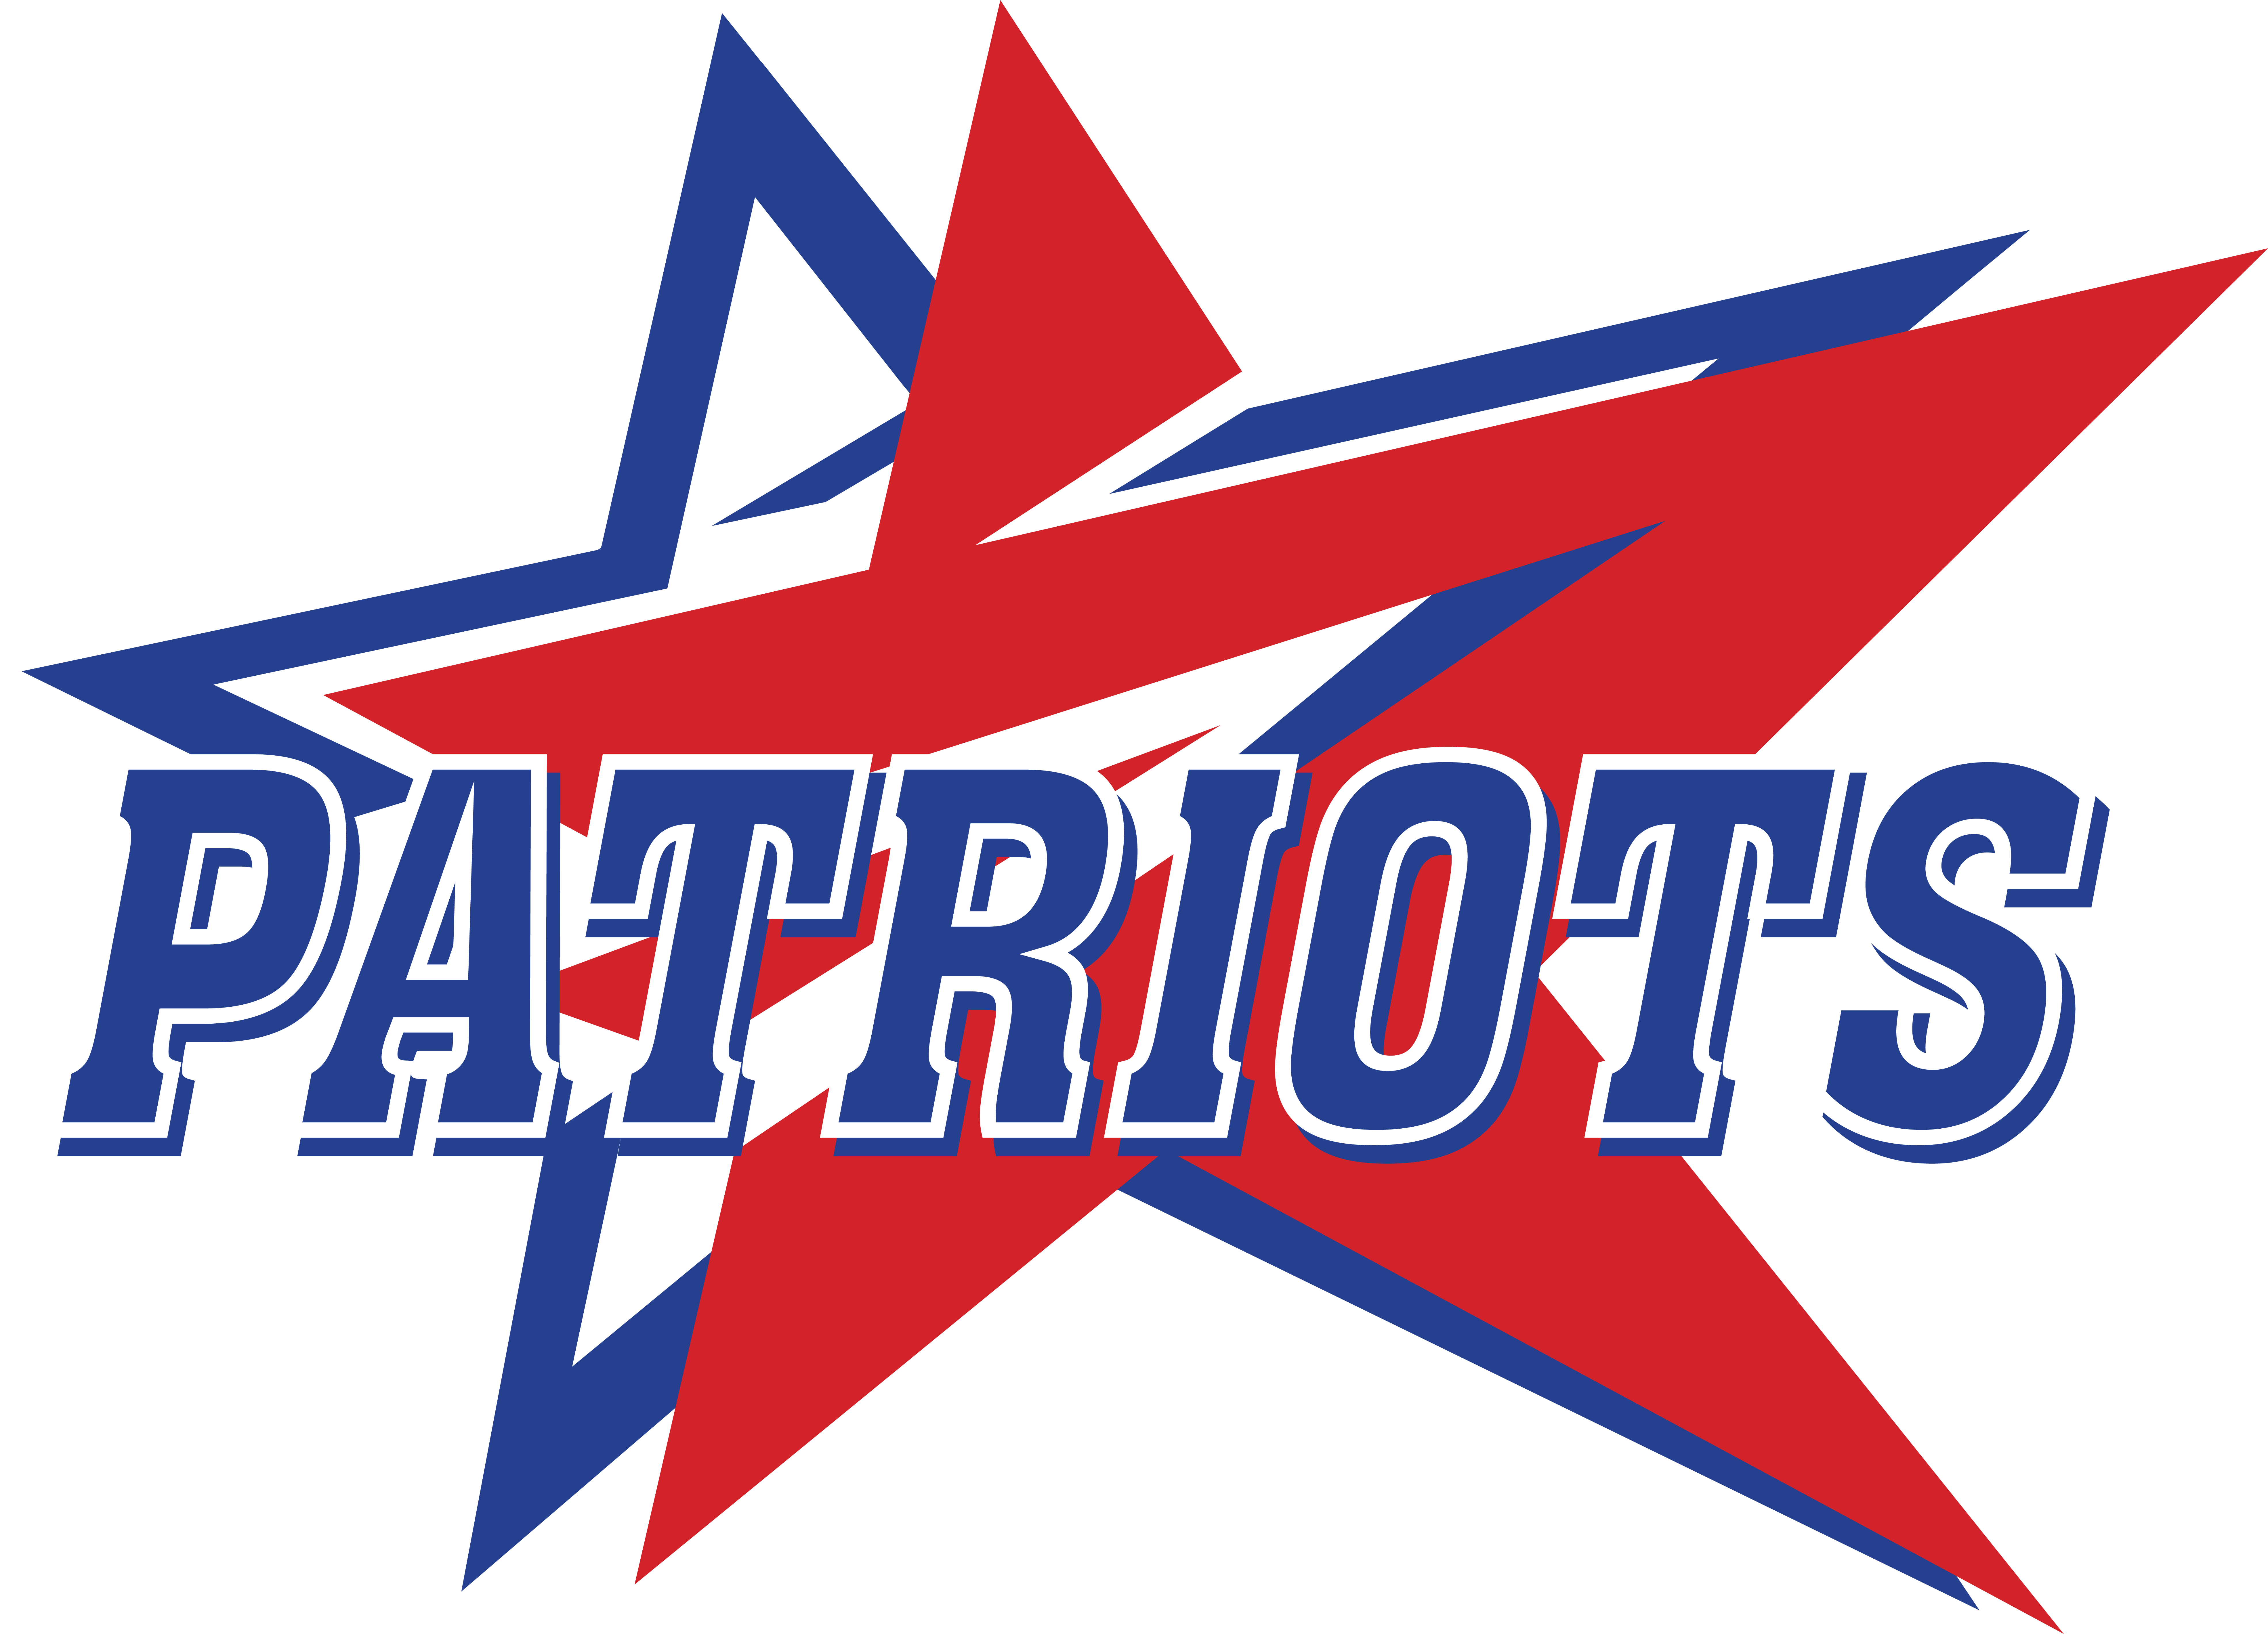 Binghamton Patriots athletics logo